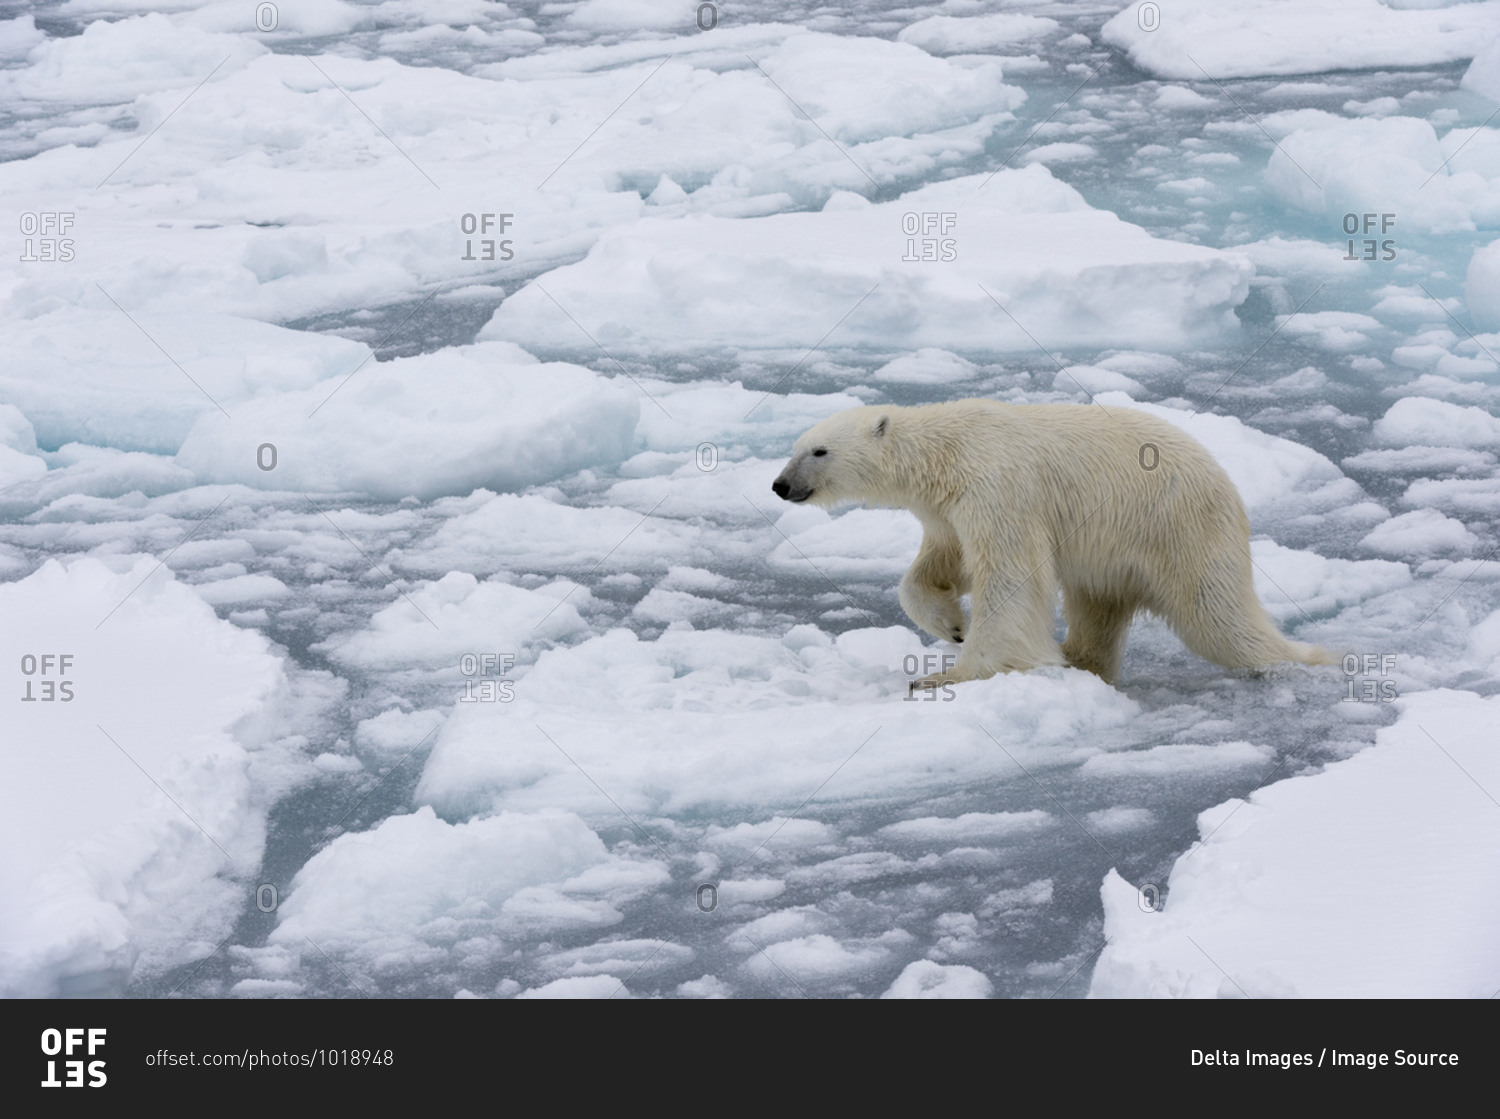 Polar bear (Ursus maritimus), Polar Ice Cap, 81north of Spitsbergen, Norway